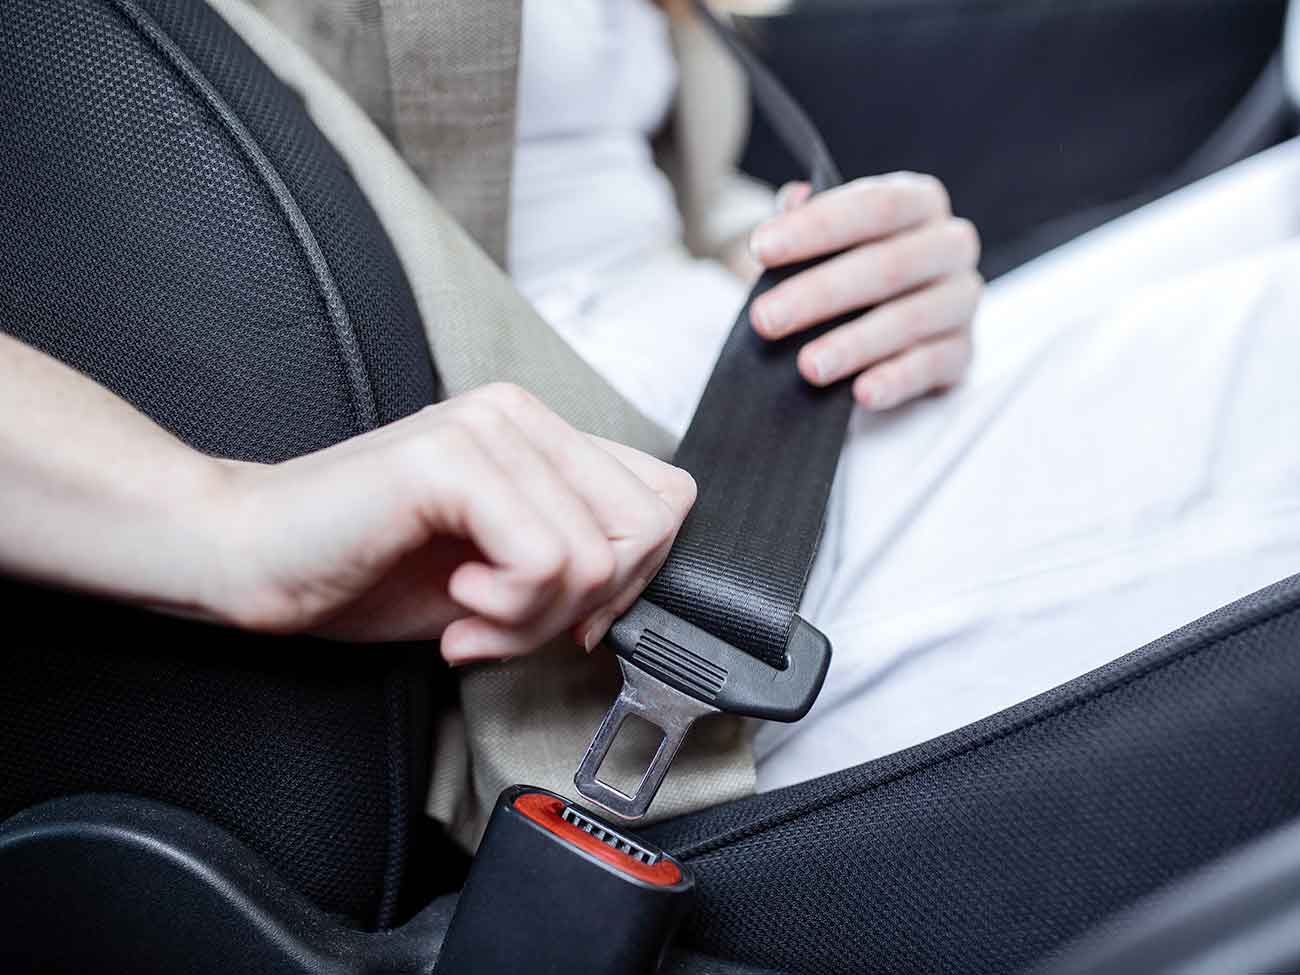 Car seatbelt